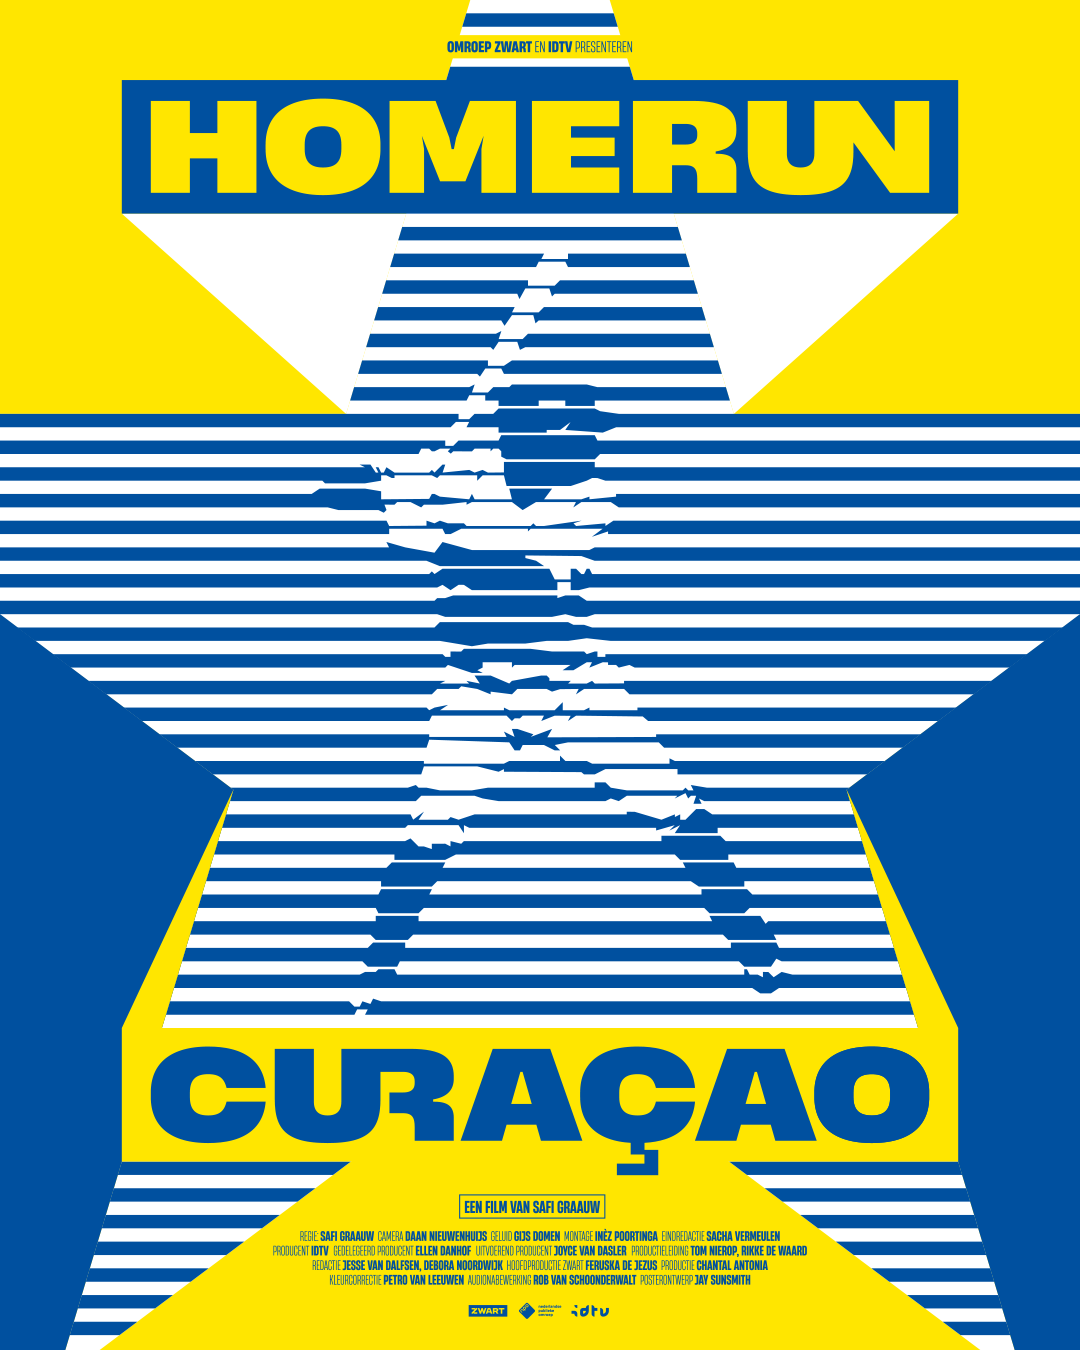 Default image Homerun Curaçao